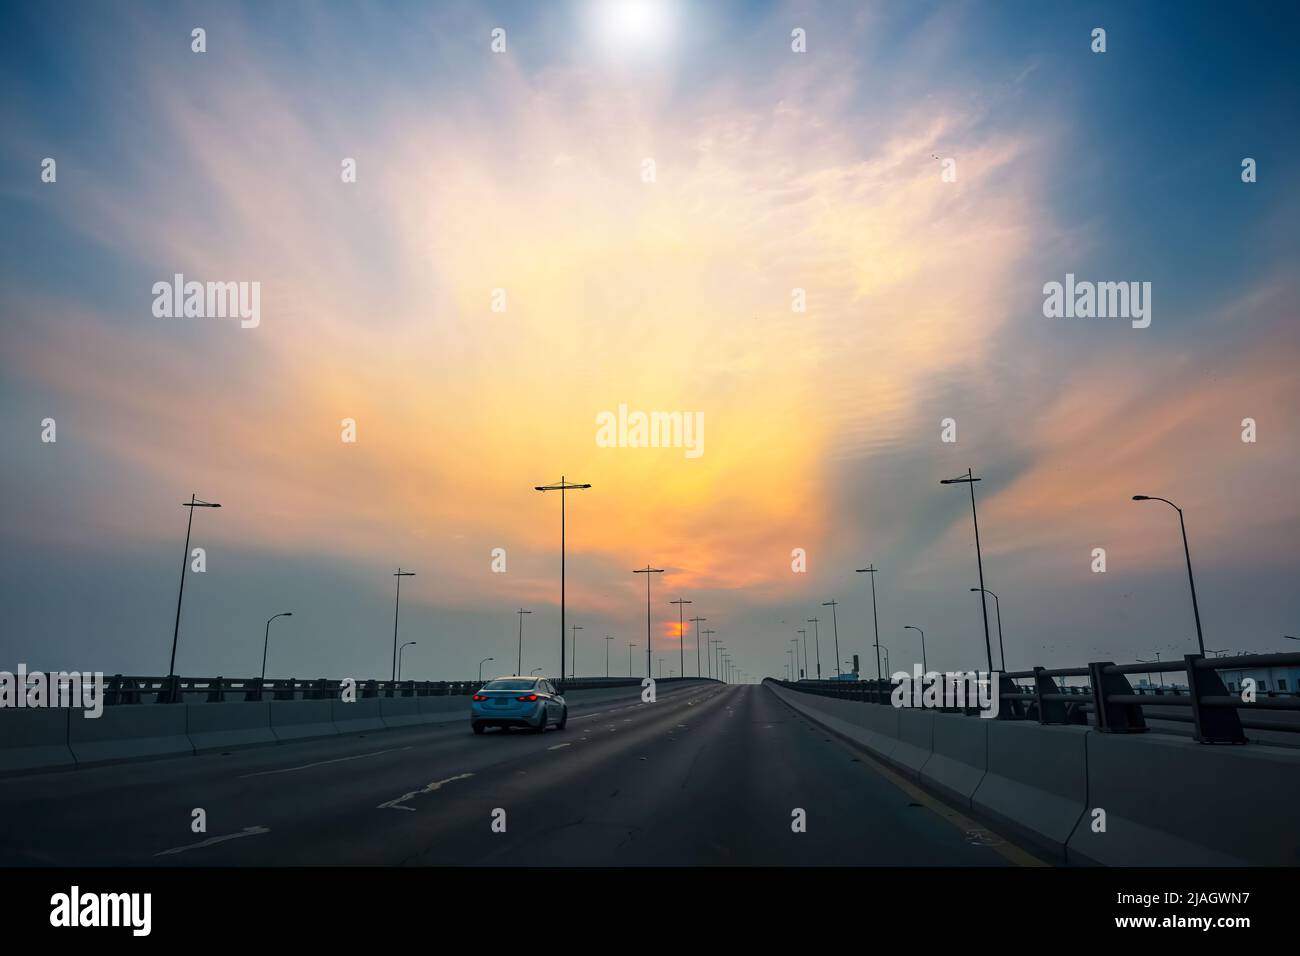 Dammam Street urban city in Sunset background -Dammam, Saudi Arabia. Stock Photo